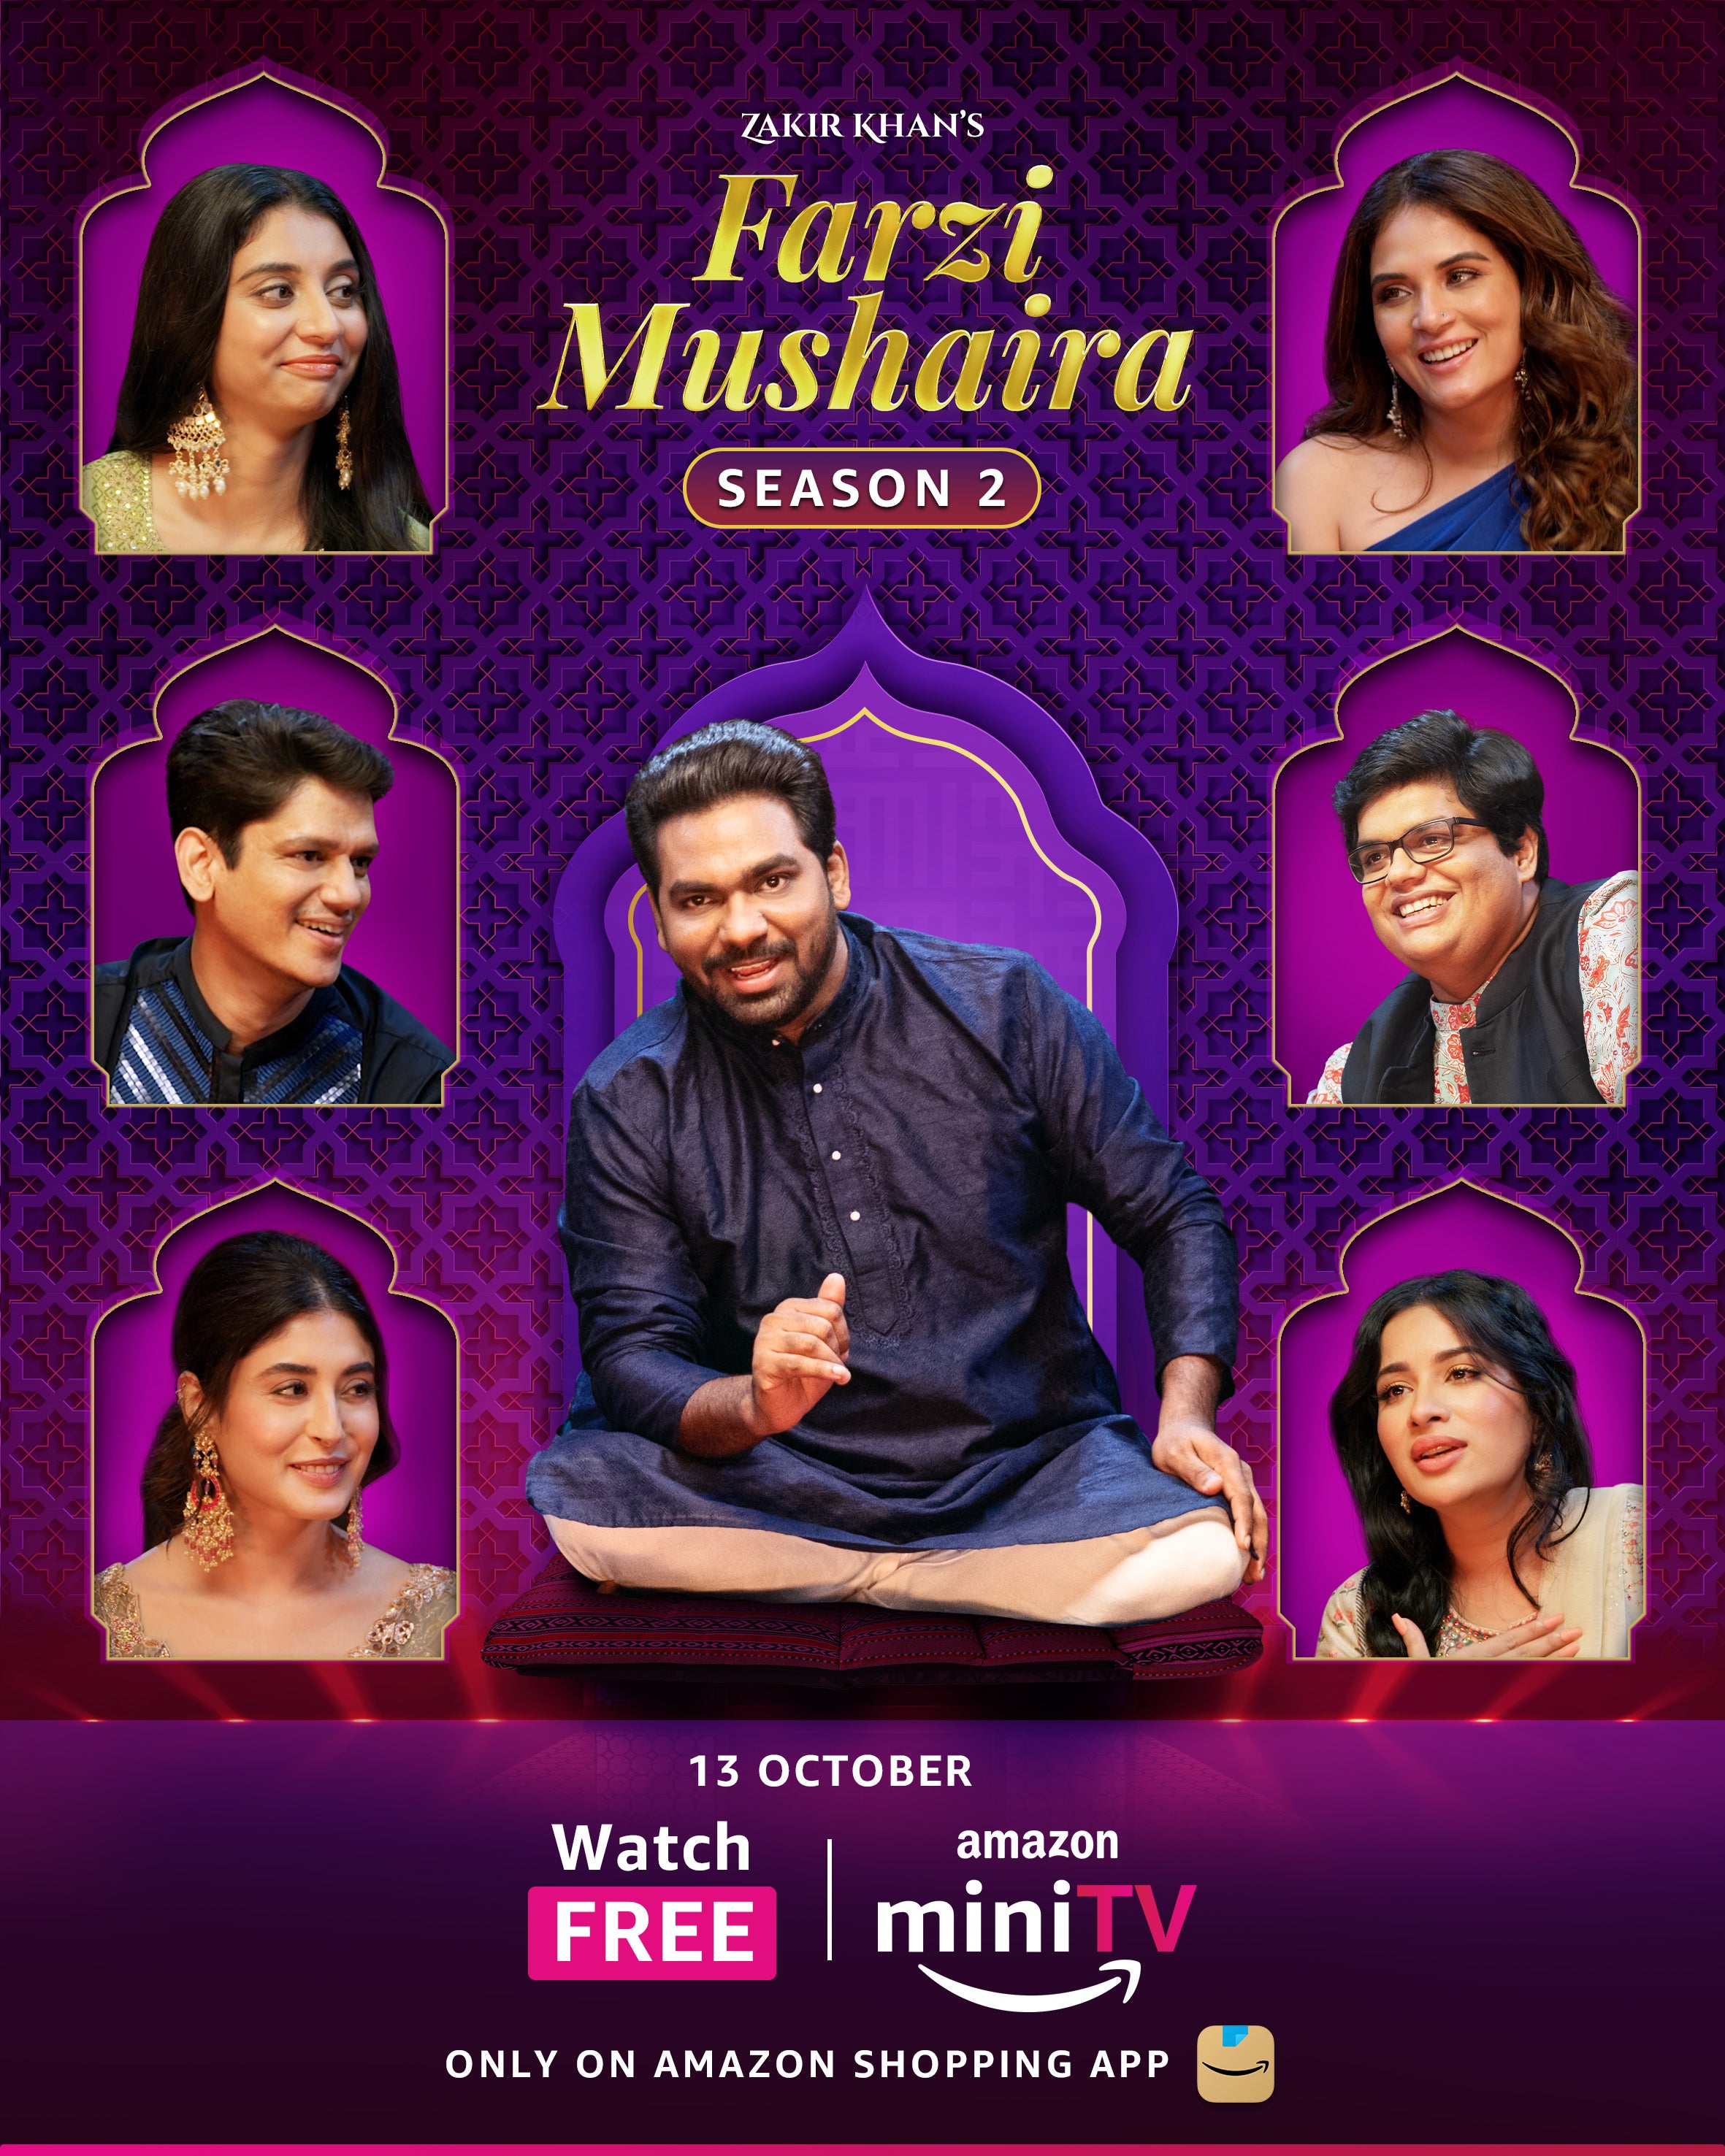 TV ratings for Farzi Mushaira (फर्जी मुशायरा) in the United Kingdom. Amazon mini TV TV series